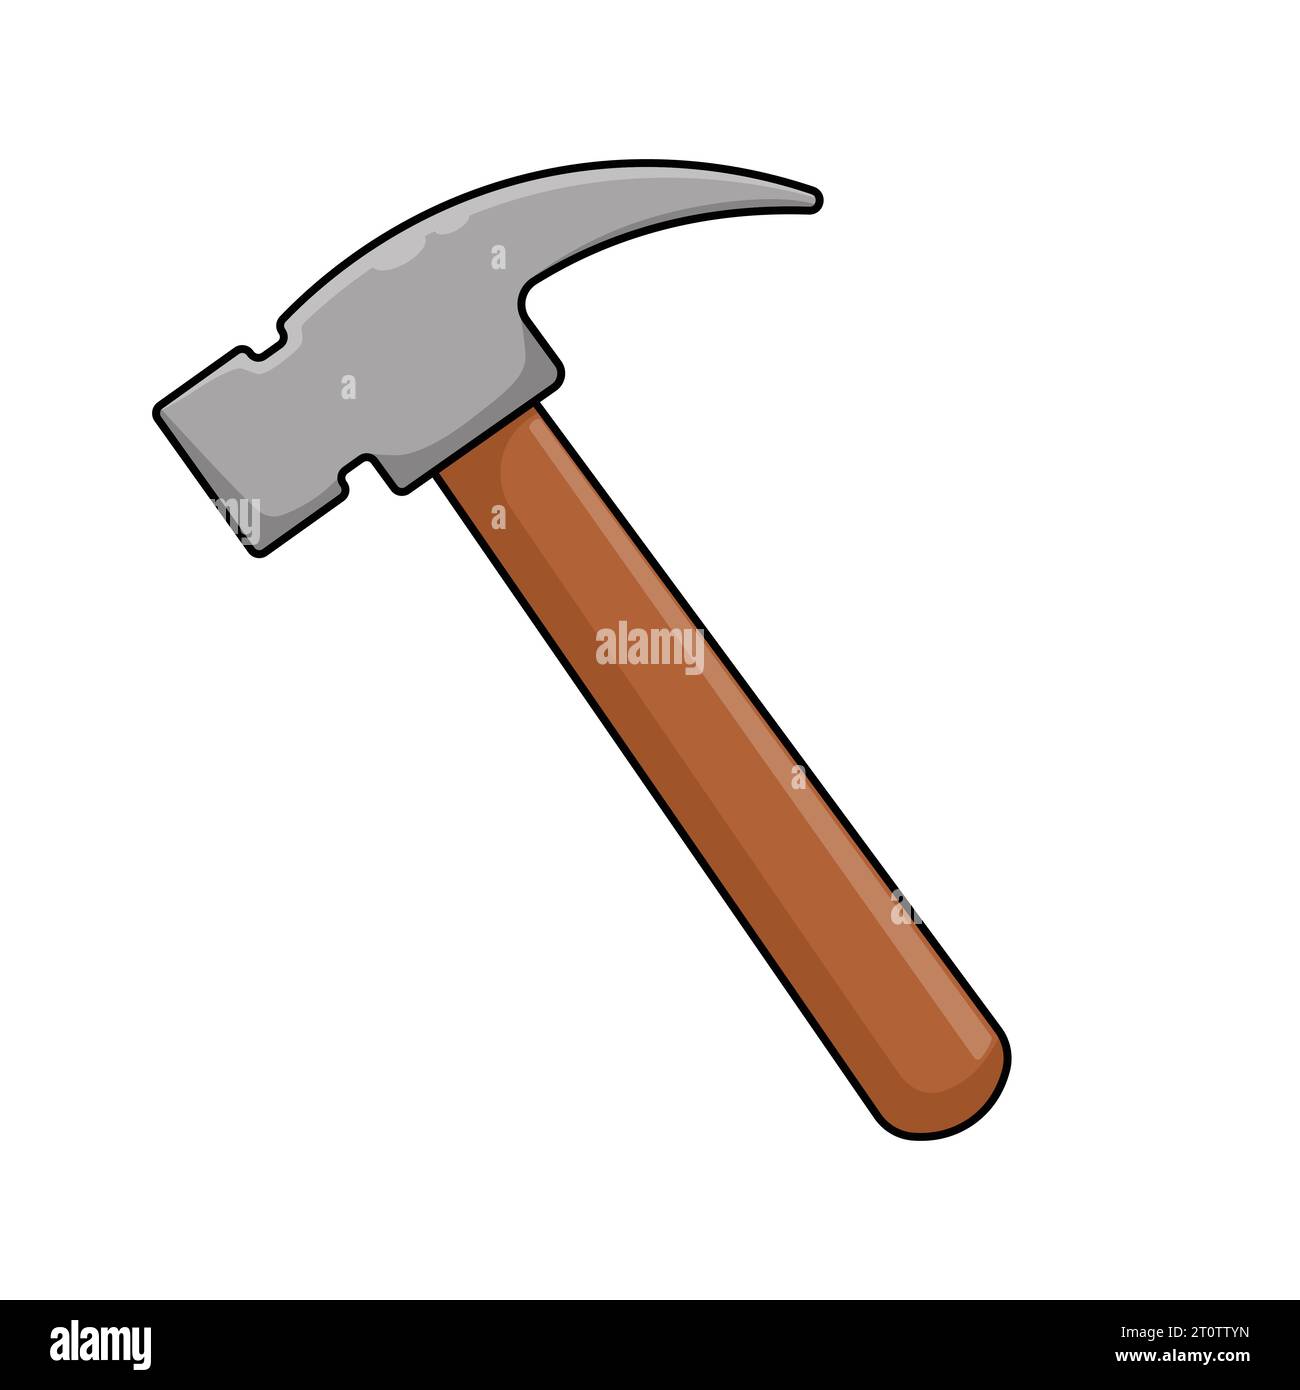 hammer cartoon image